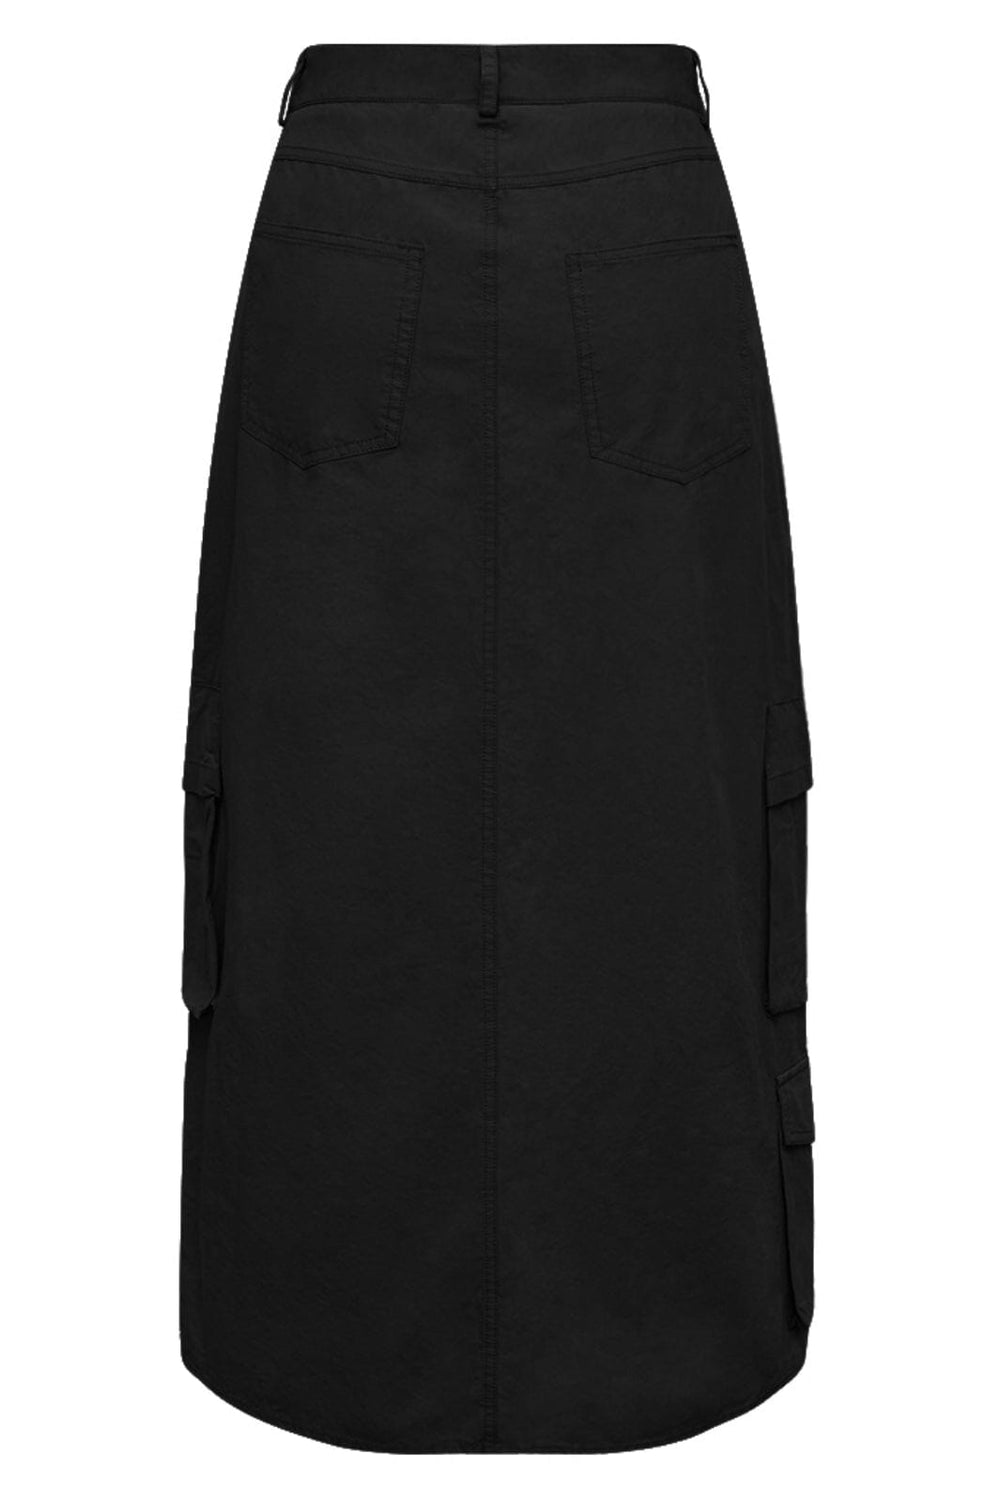 Gossia - SilaGO Skirt - Black Nederdele 